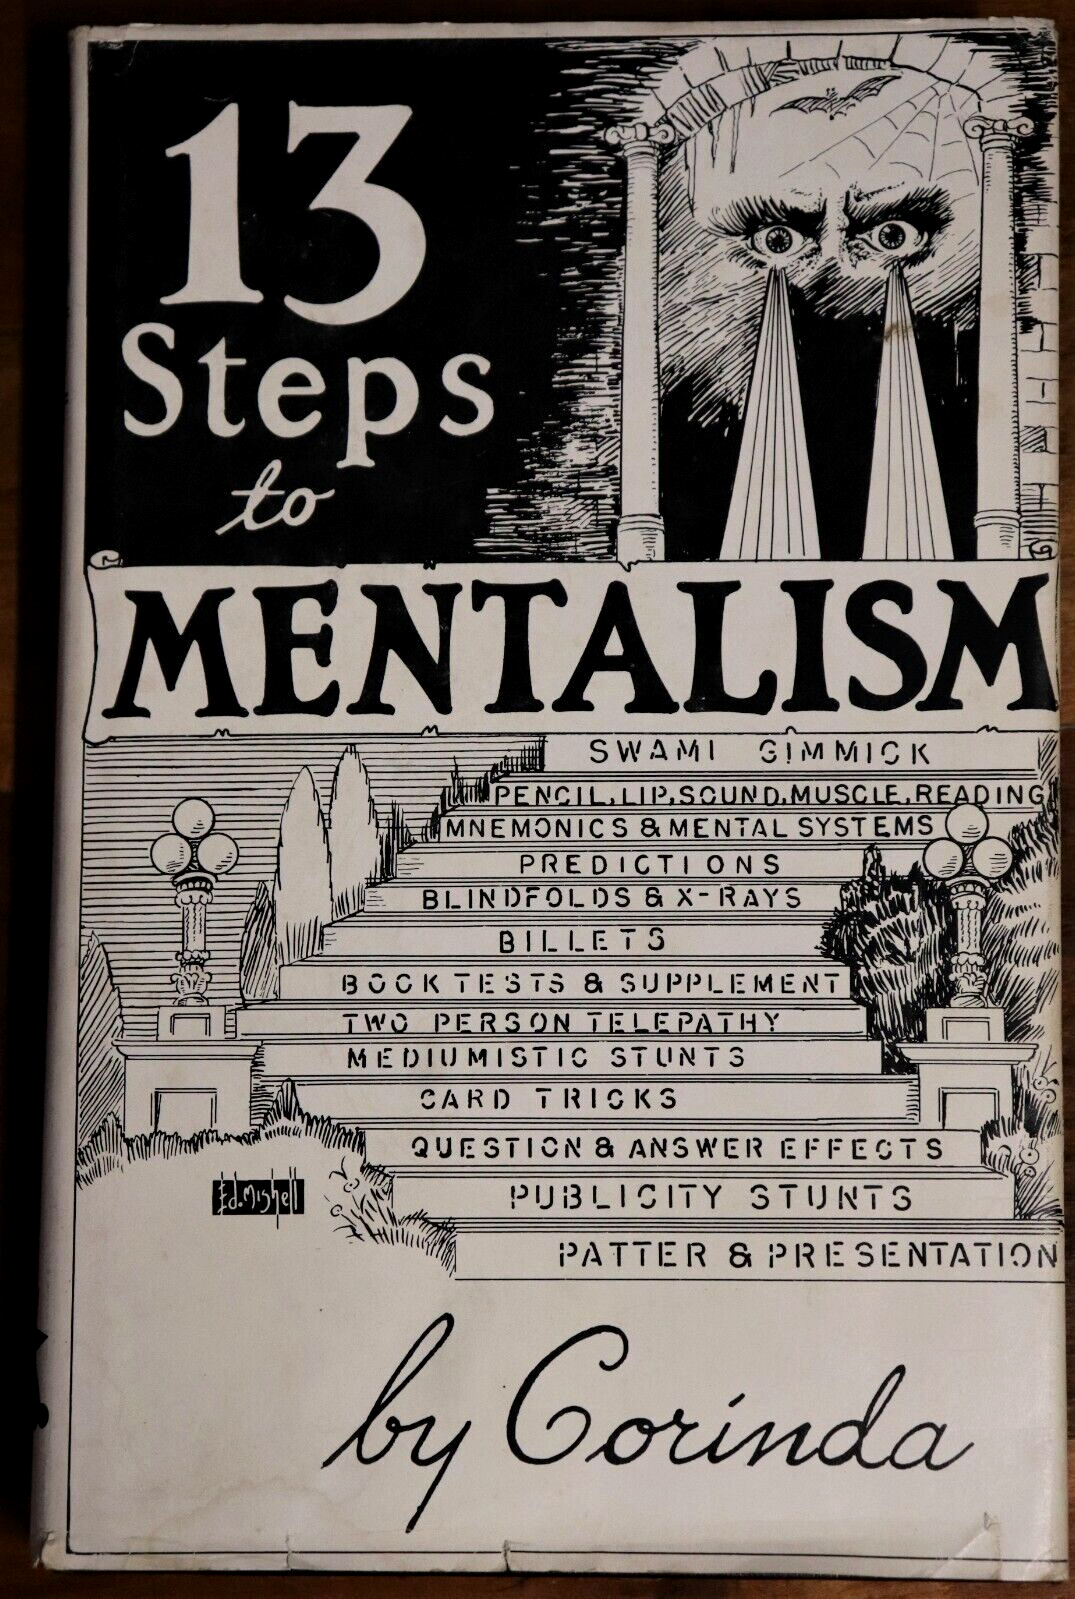 13 Steps To Mentalism - 1968 - 1st Ed. Psychic Phenomena & Magic Book